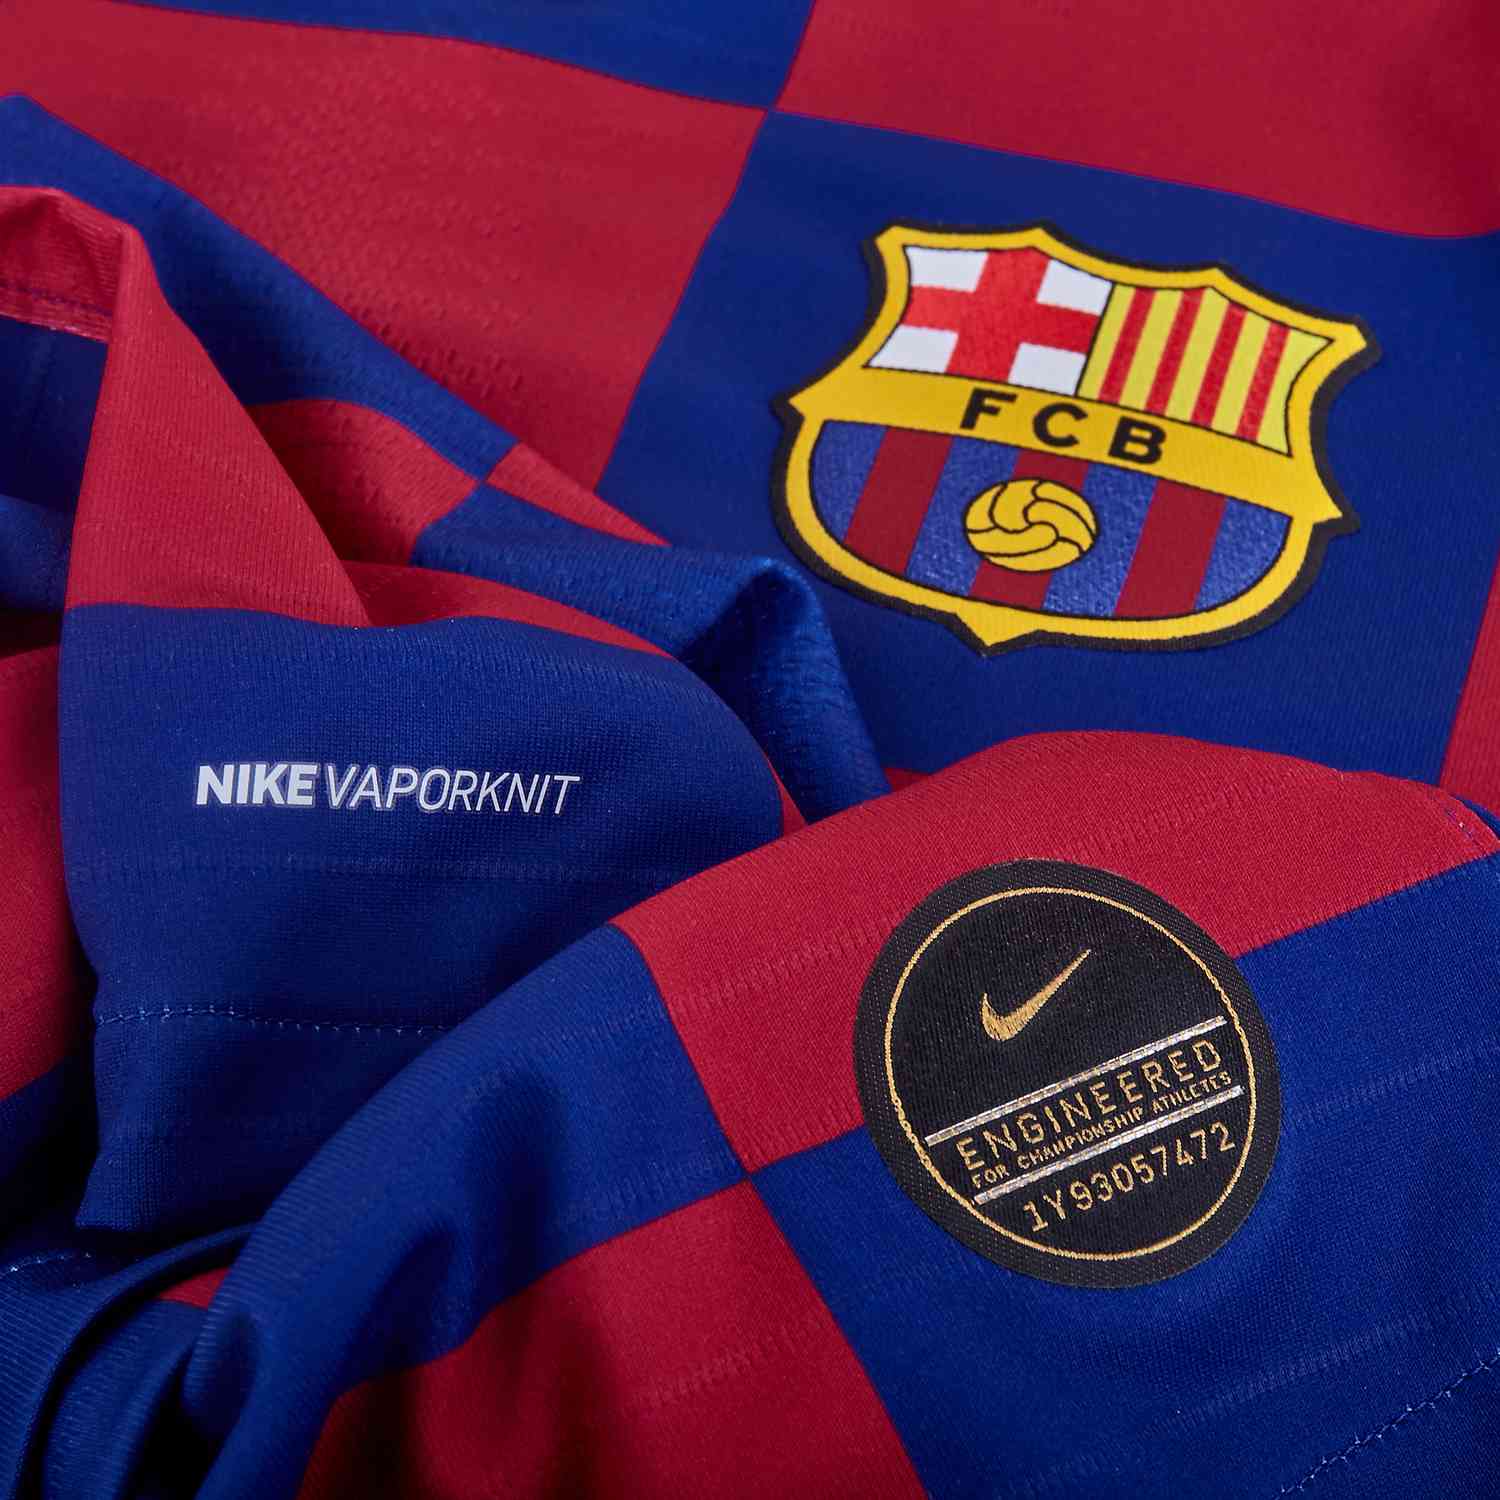 barcelona jersey logo